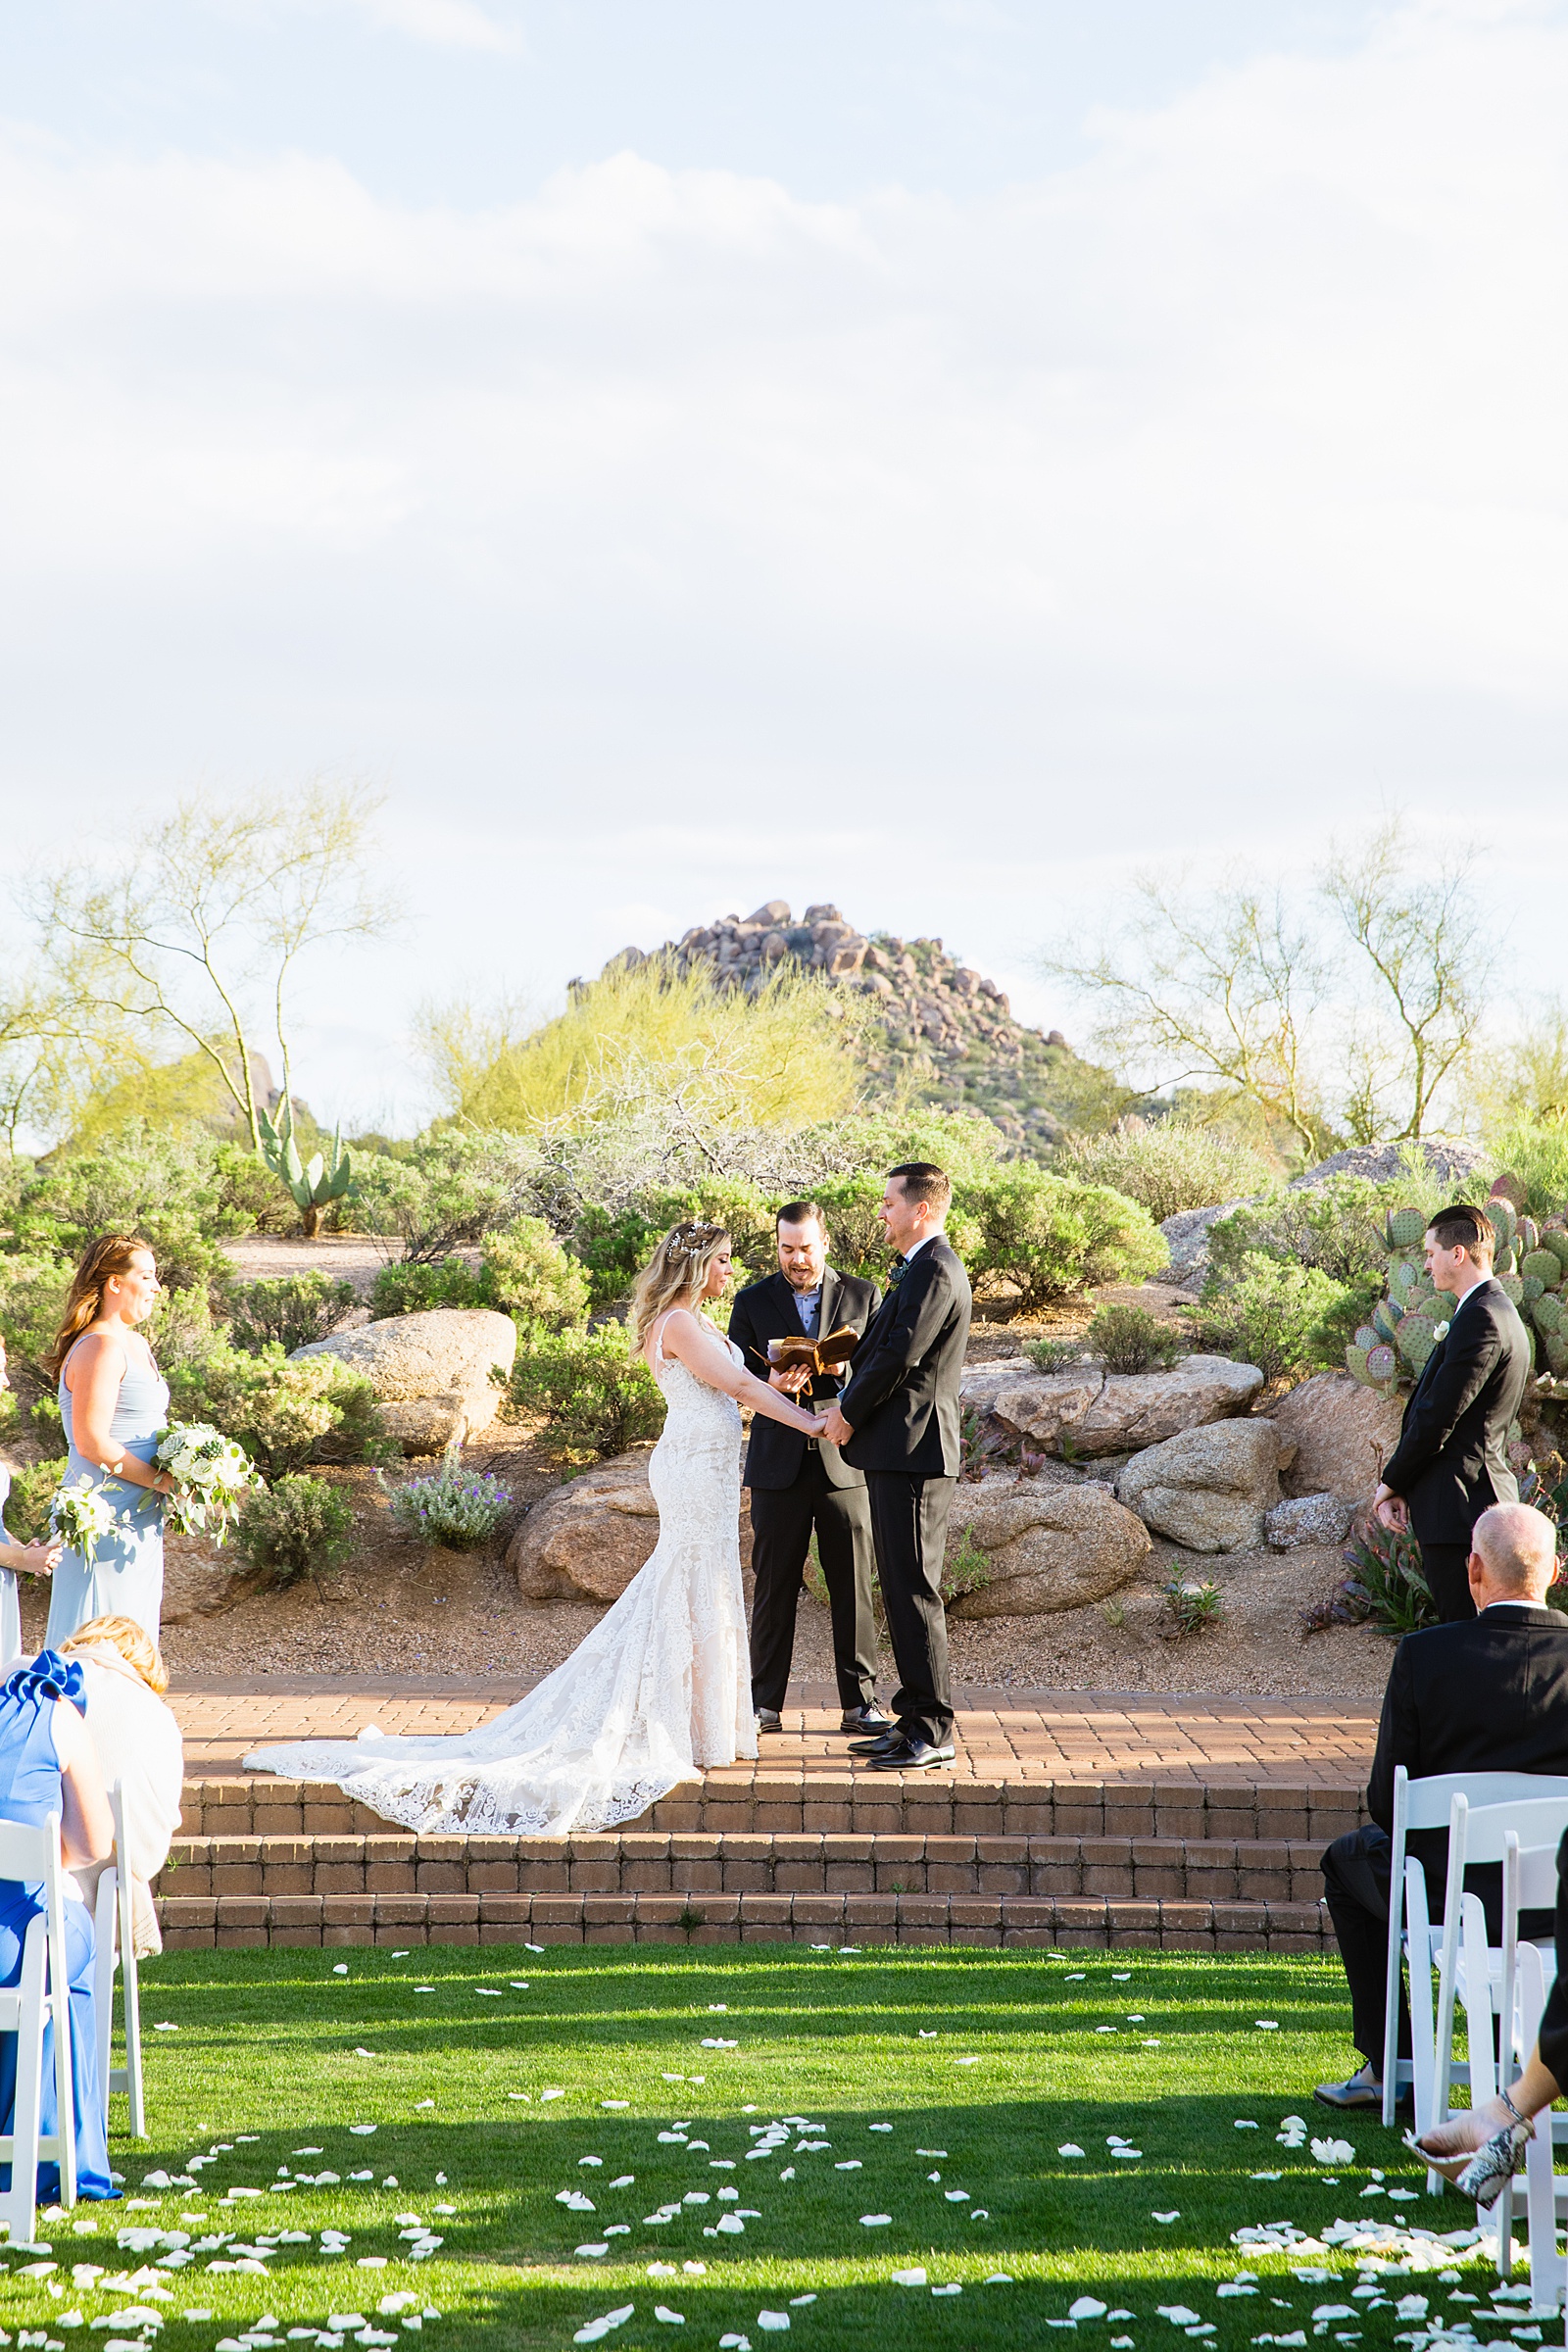 Wedding ceremony at Troon North by Phoenix wedding photographer PMA Photography.